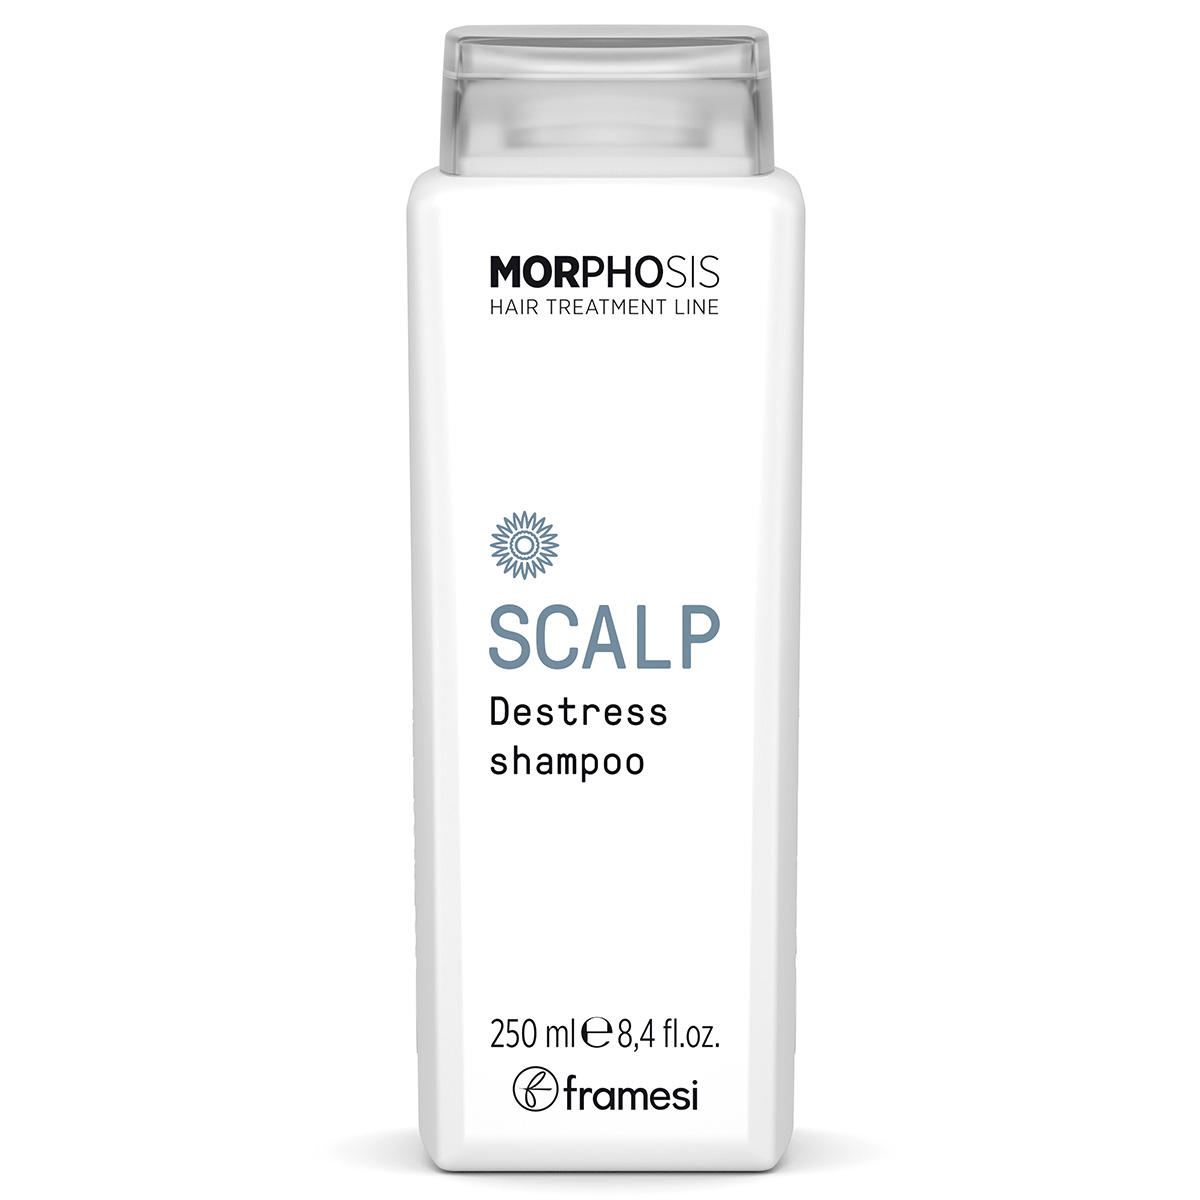 framesi MORPHOSIS Scalp Destress Shampoo 250 ml - 1